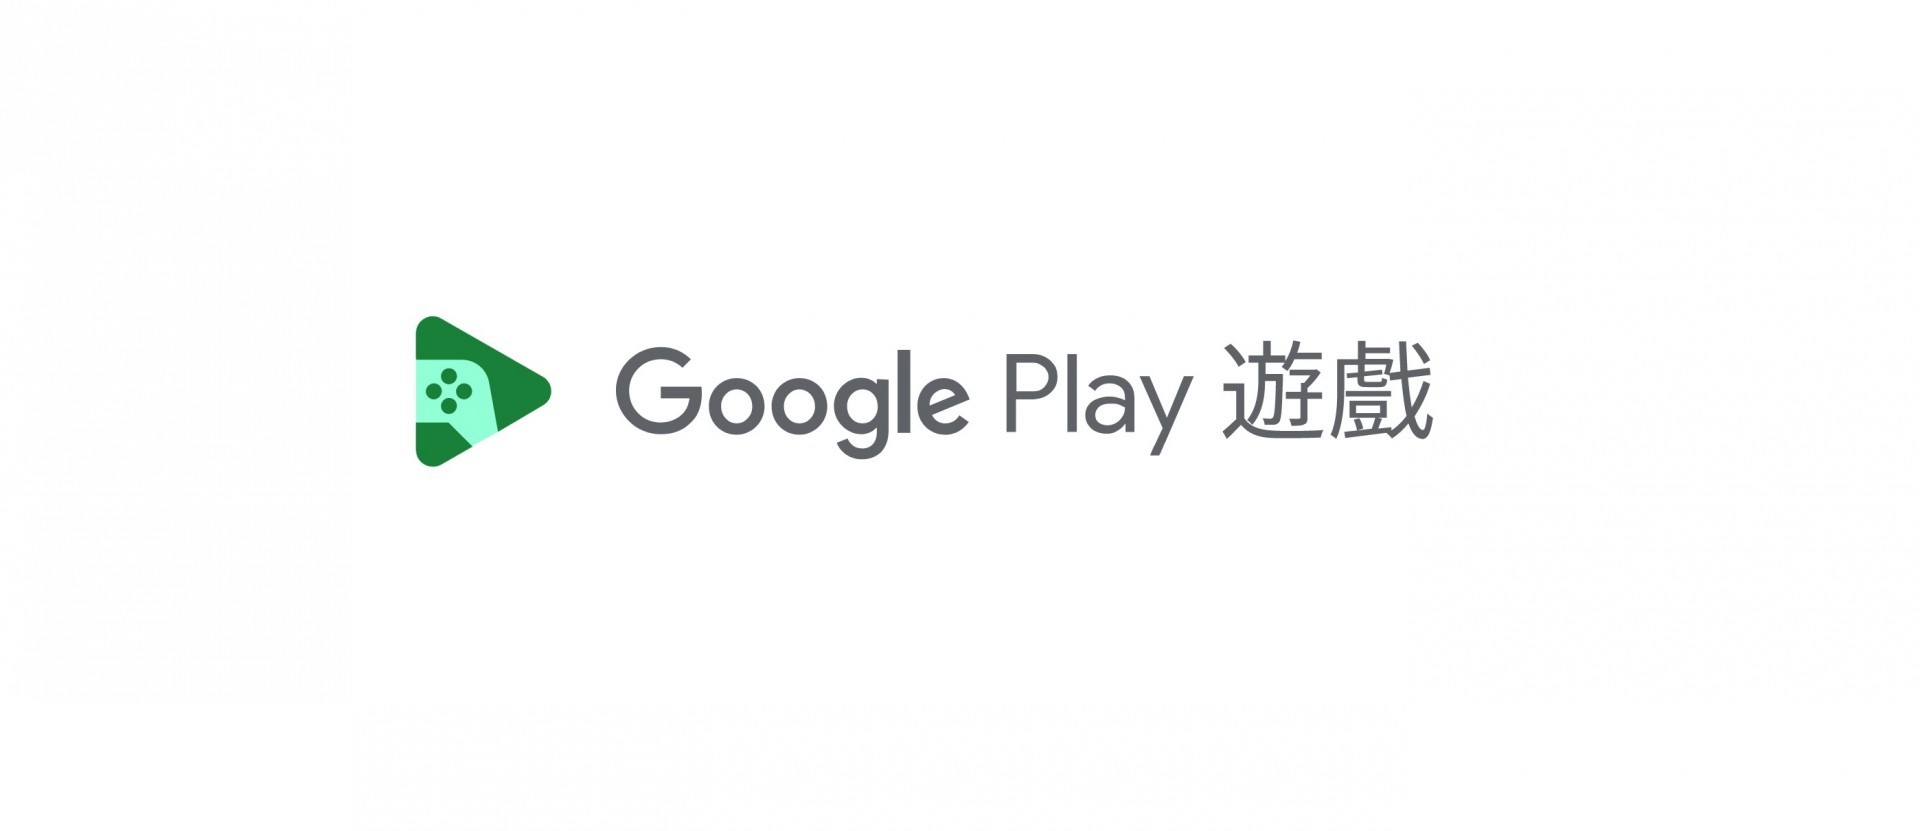 Google Play 游戏测试版于台湾抢先推出 将对应手机、平板及 PC 并支援 20 多款作品